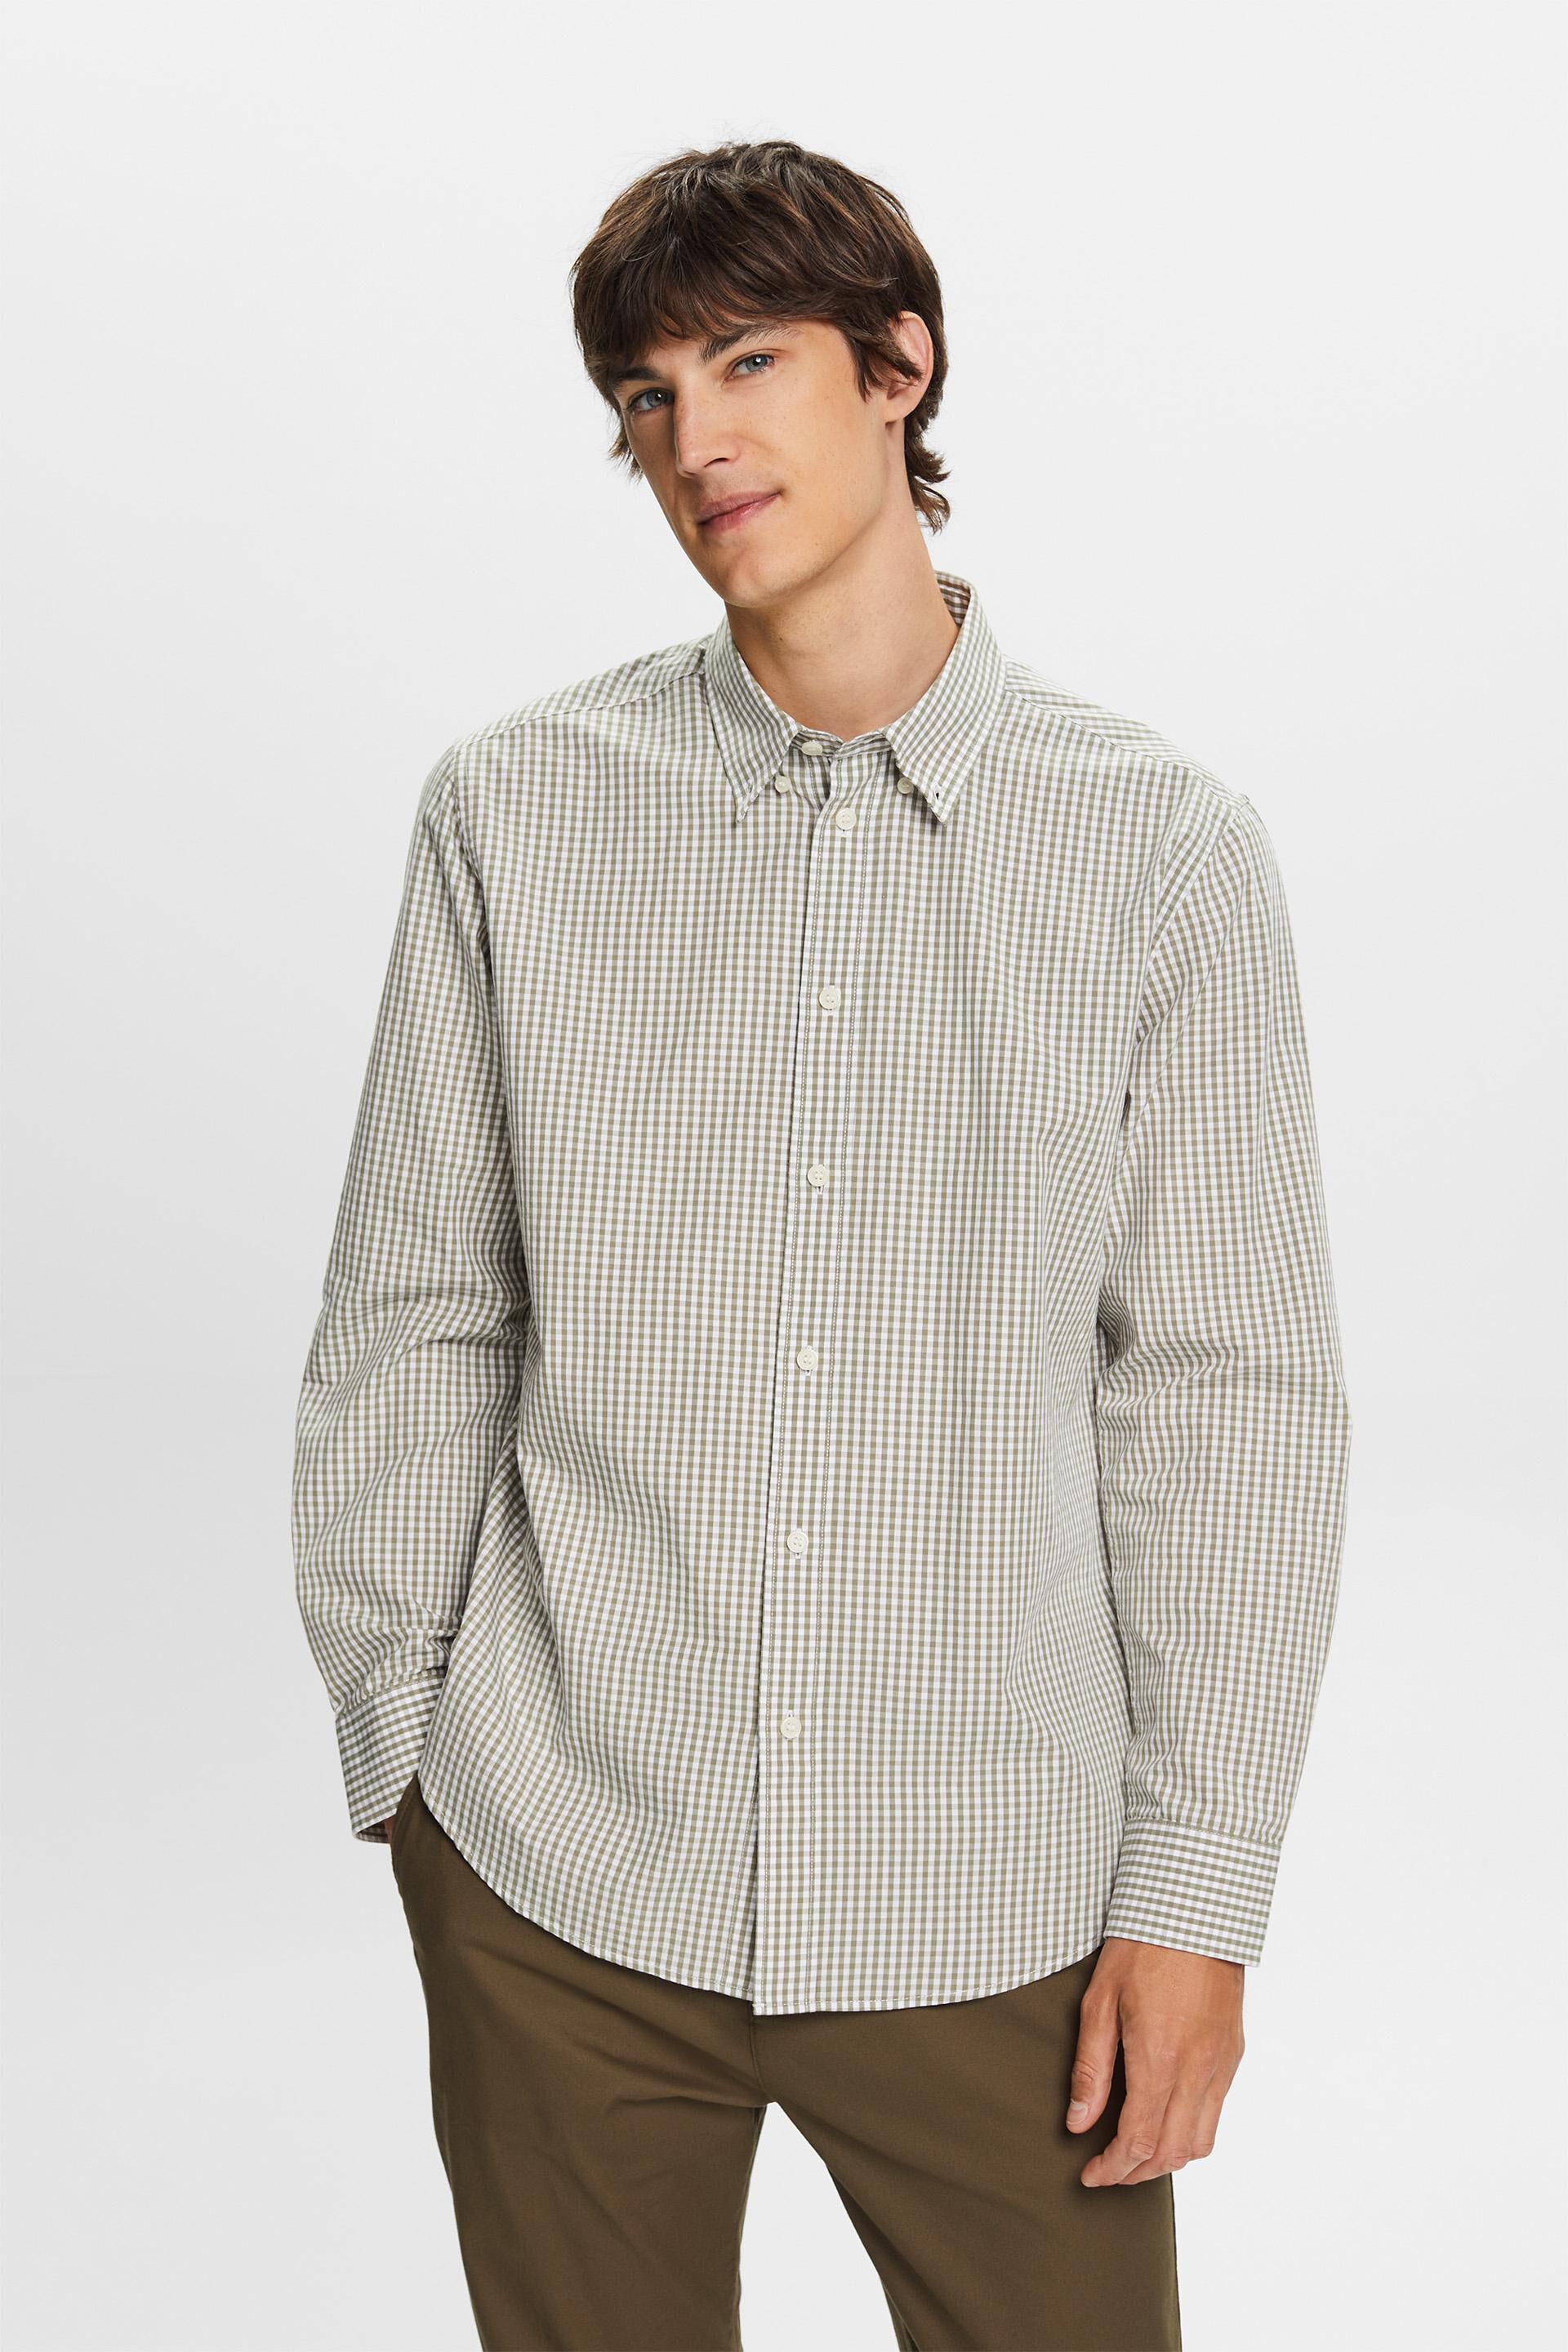 Esprit 100% button-down shirt, cotton Vichy